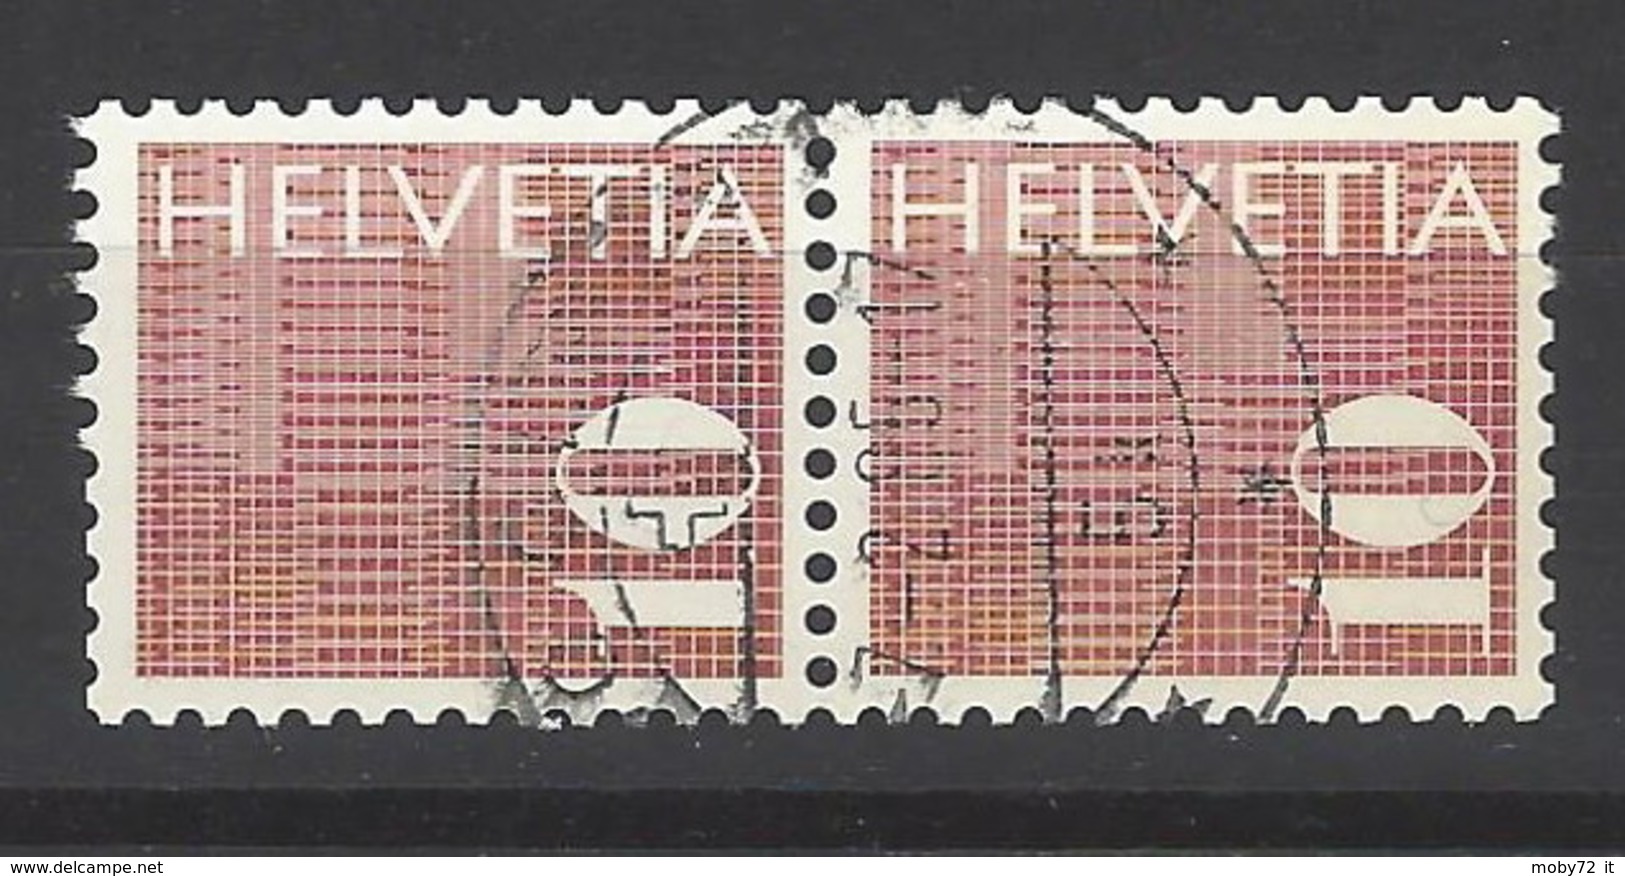 Svizzera - 1970 - Usato/used - Rollenmarken - Mi N. 933 - Franqueo